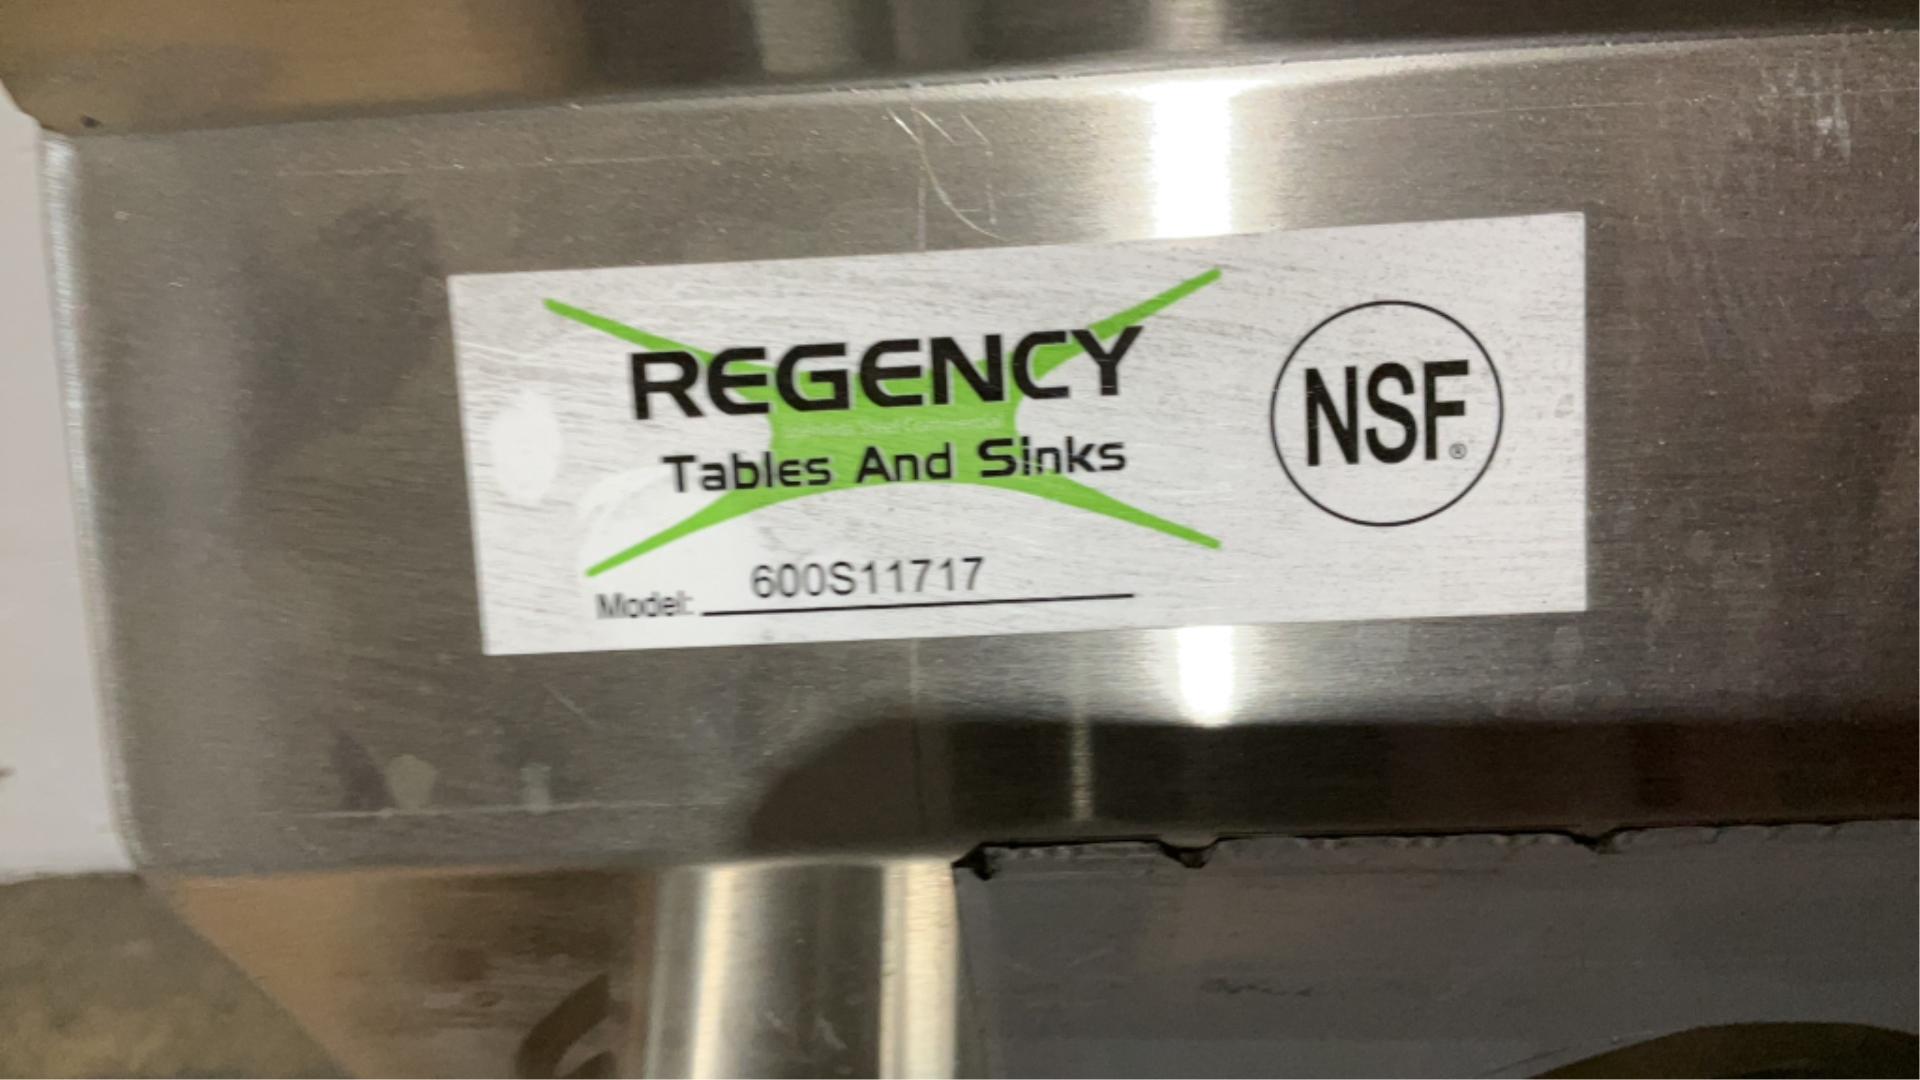 Regency Stainless Steel Sink 600S11717